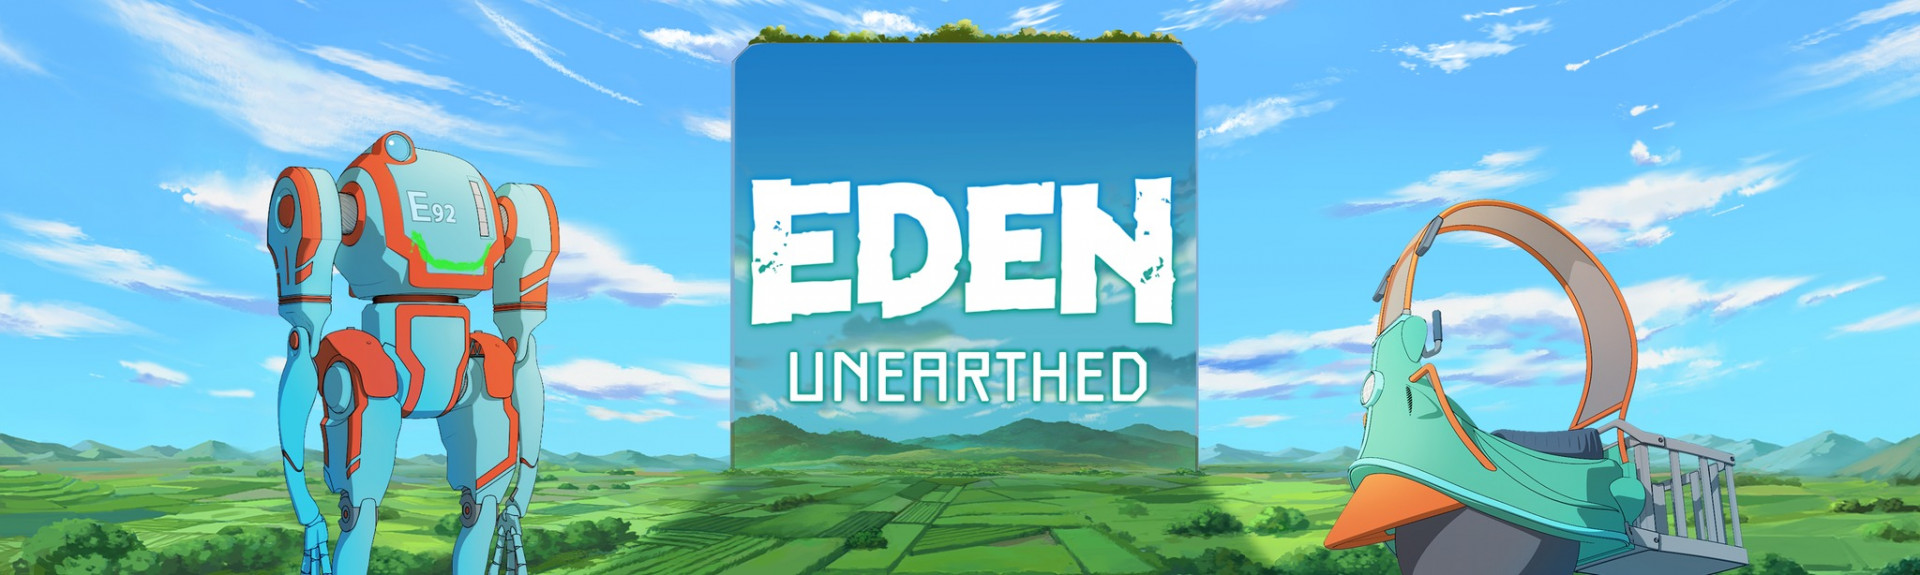 Eden Unearthed App Lab